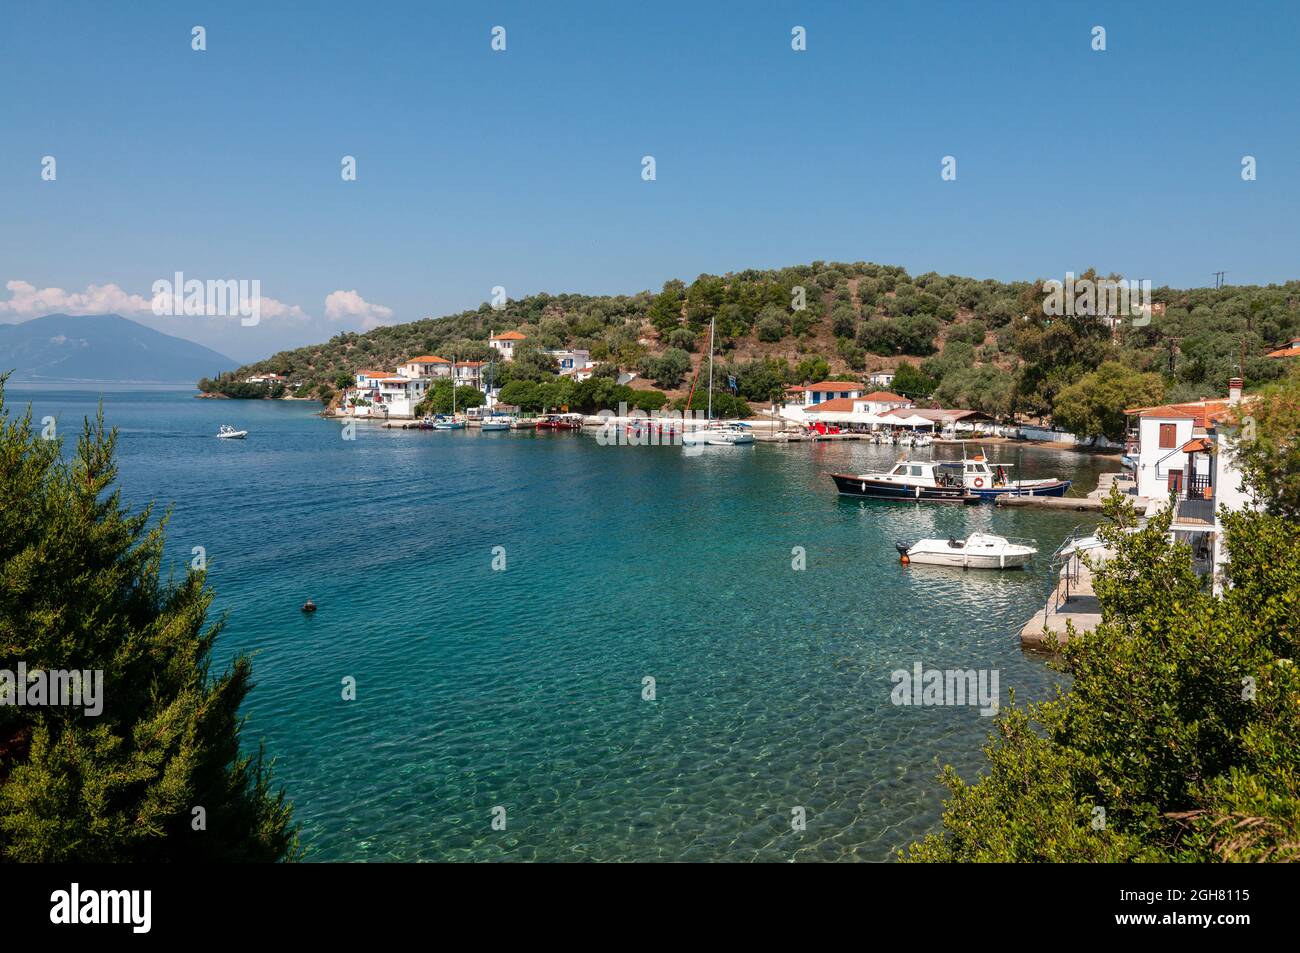 The little harbour at Paleo Trkeri on the island of Palio Trikeri on the southern coast of the Pelion Peninsula, Greece Stock Photo